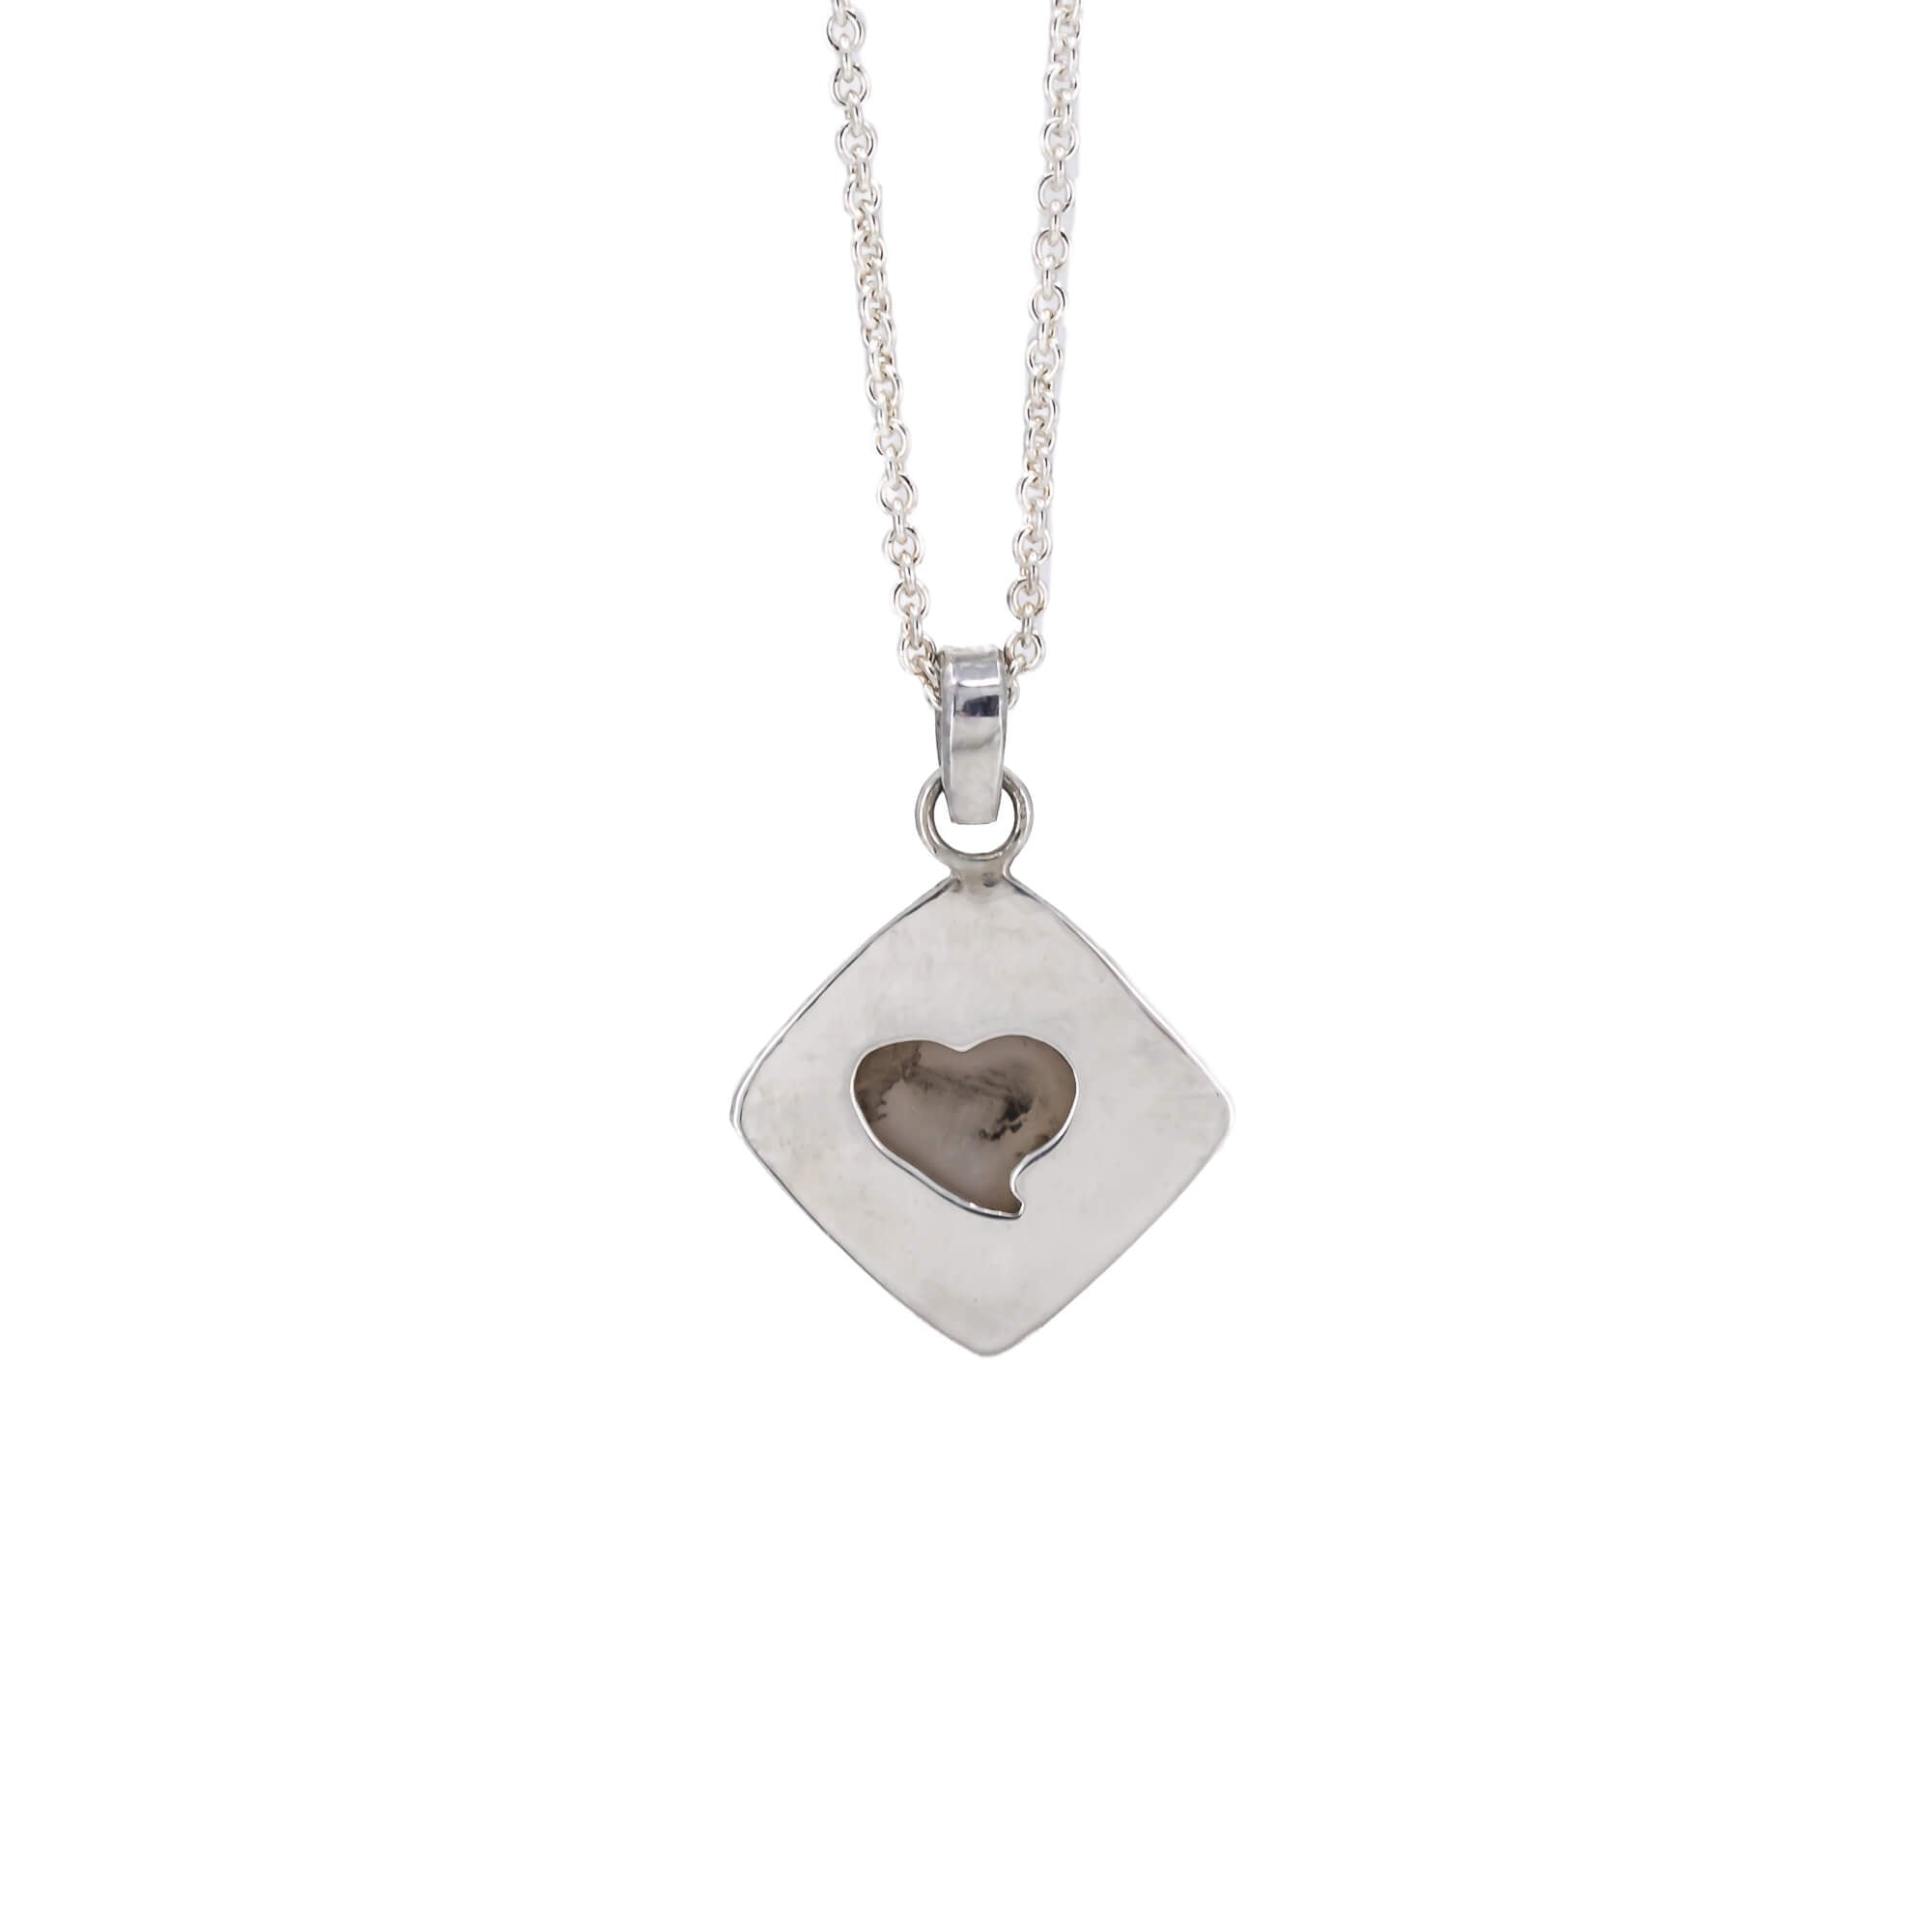 Back of square lavender druse pendant necklace in sterling silver